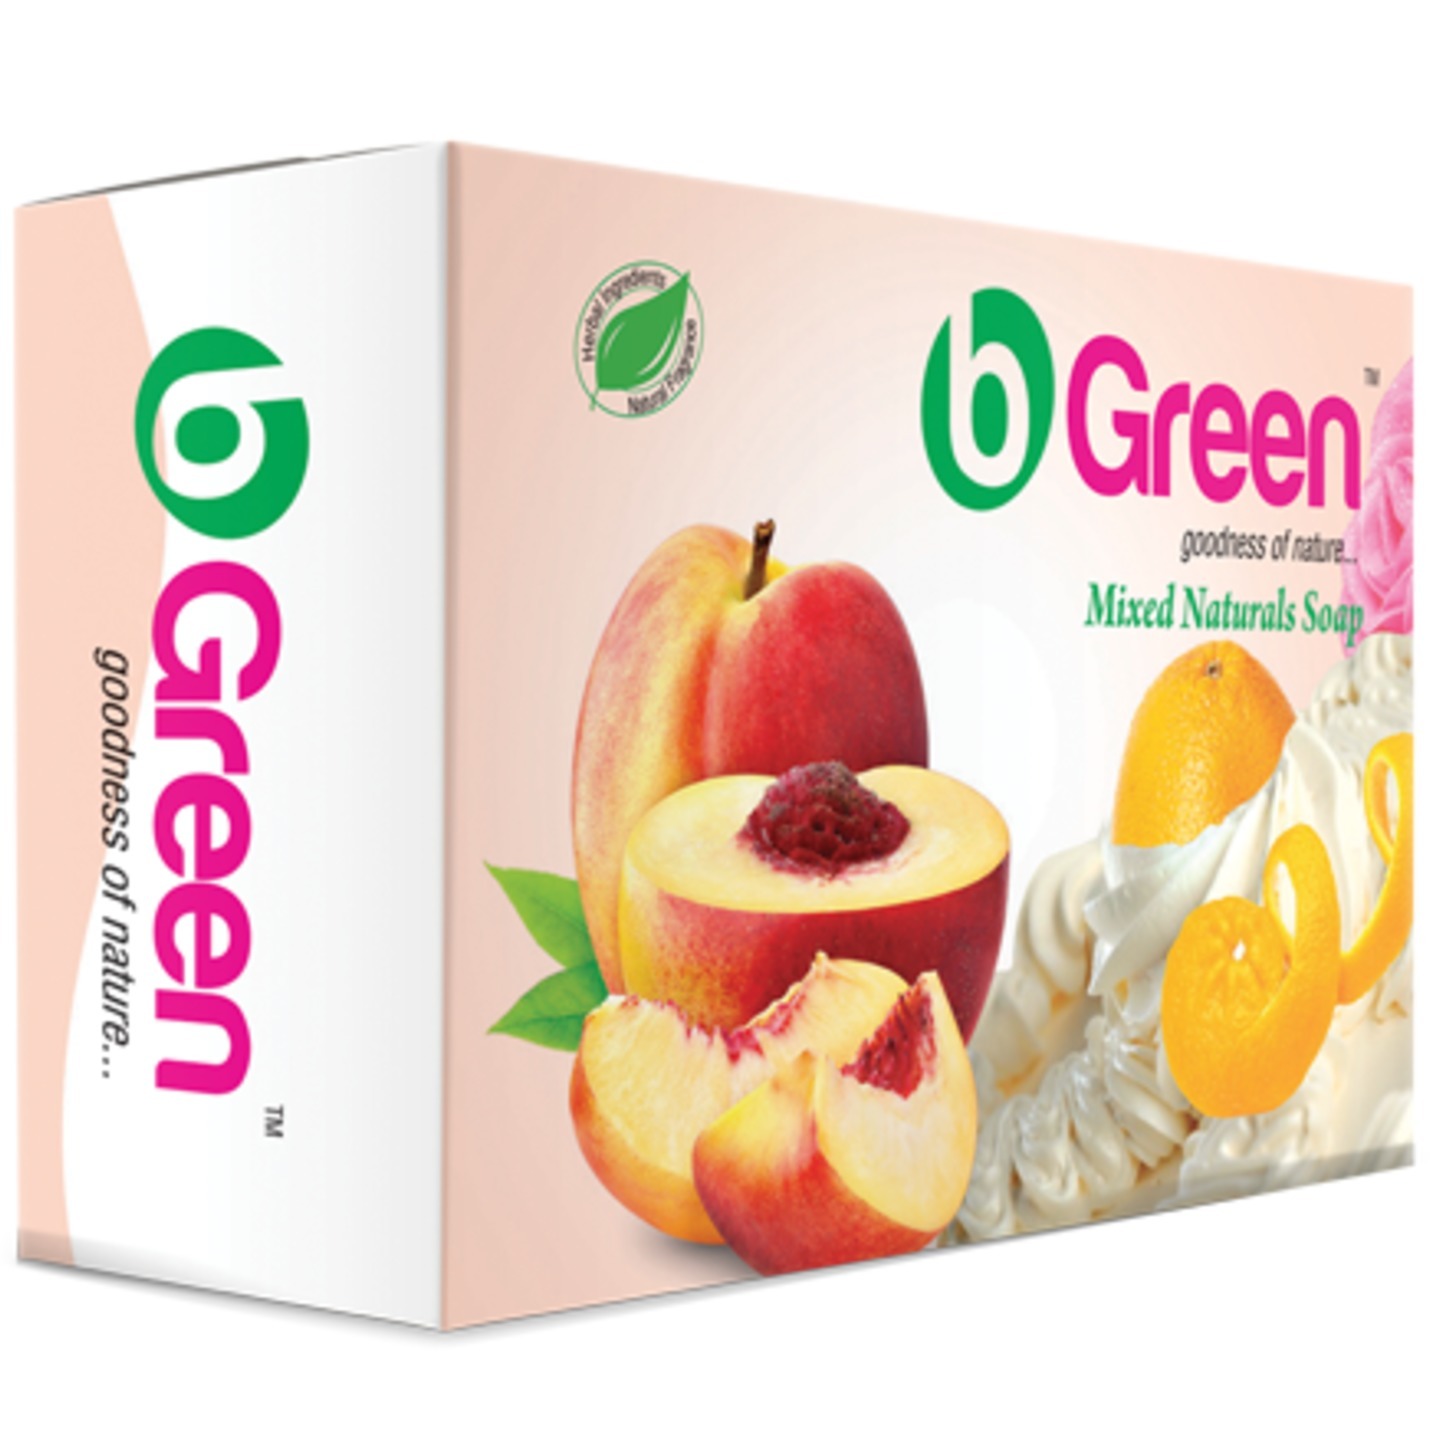 Bgreen Mixed Fruit Bathing Soaps-1 Dozen